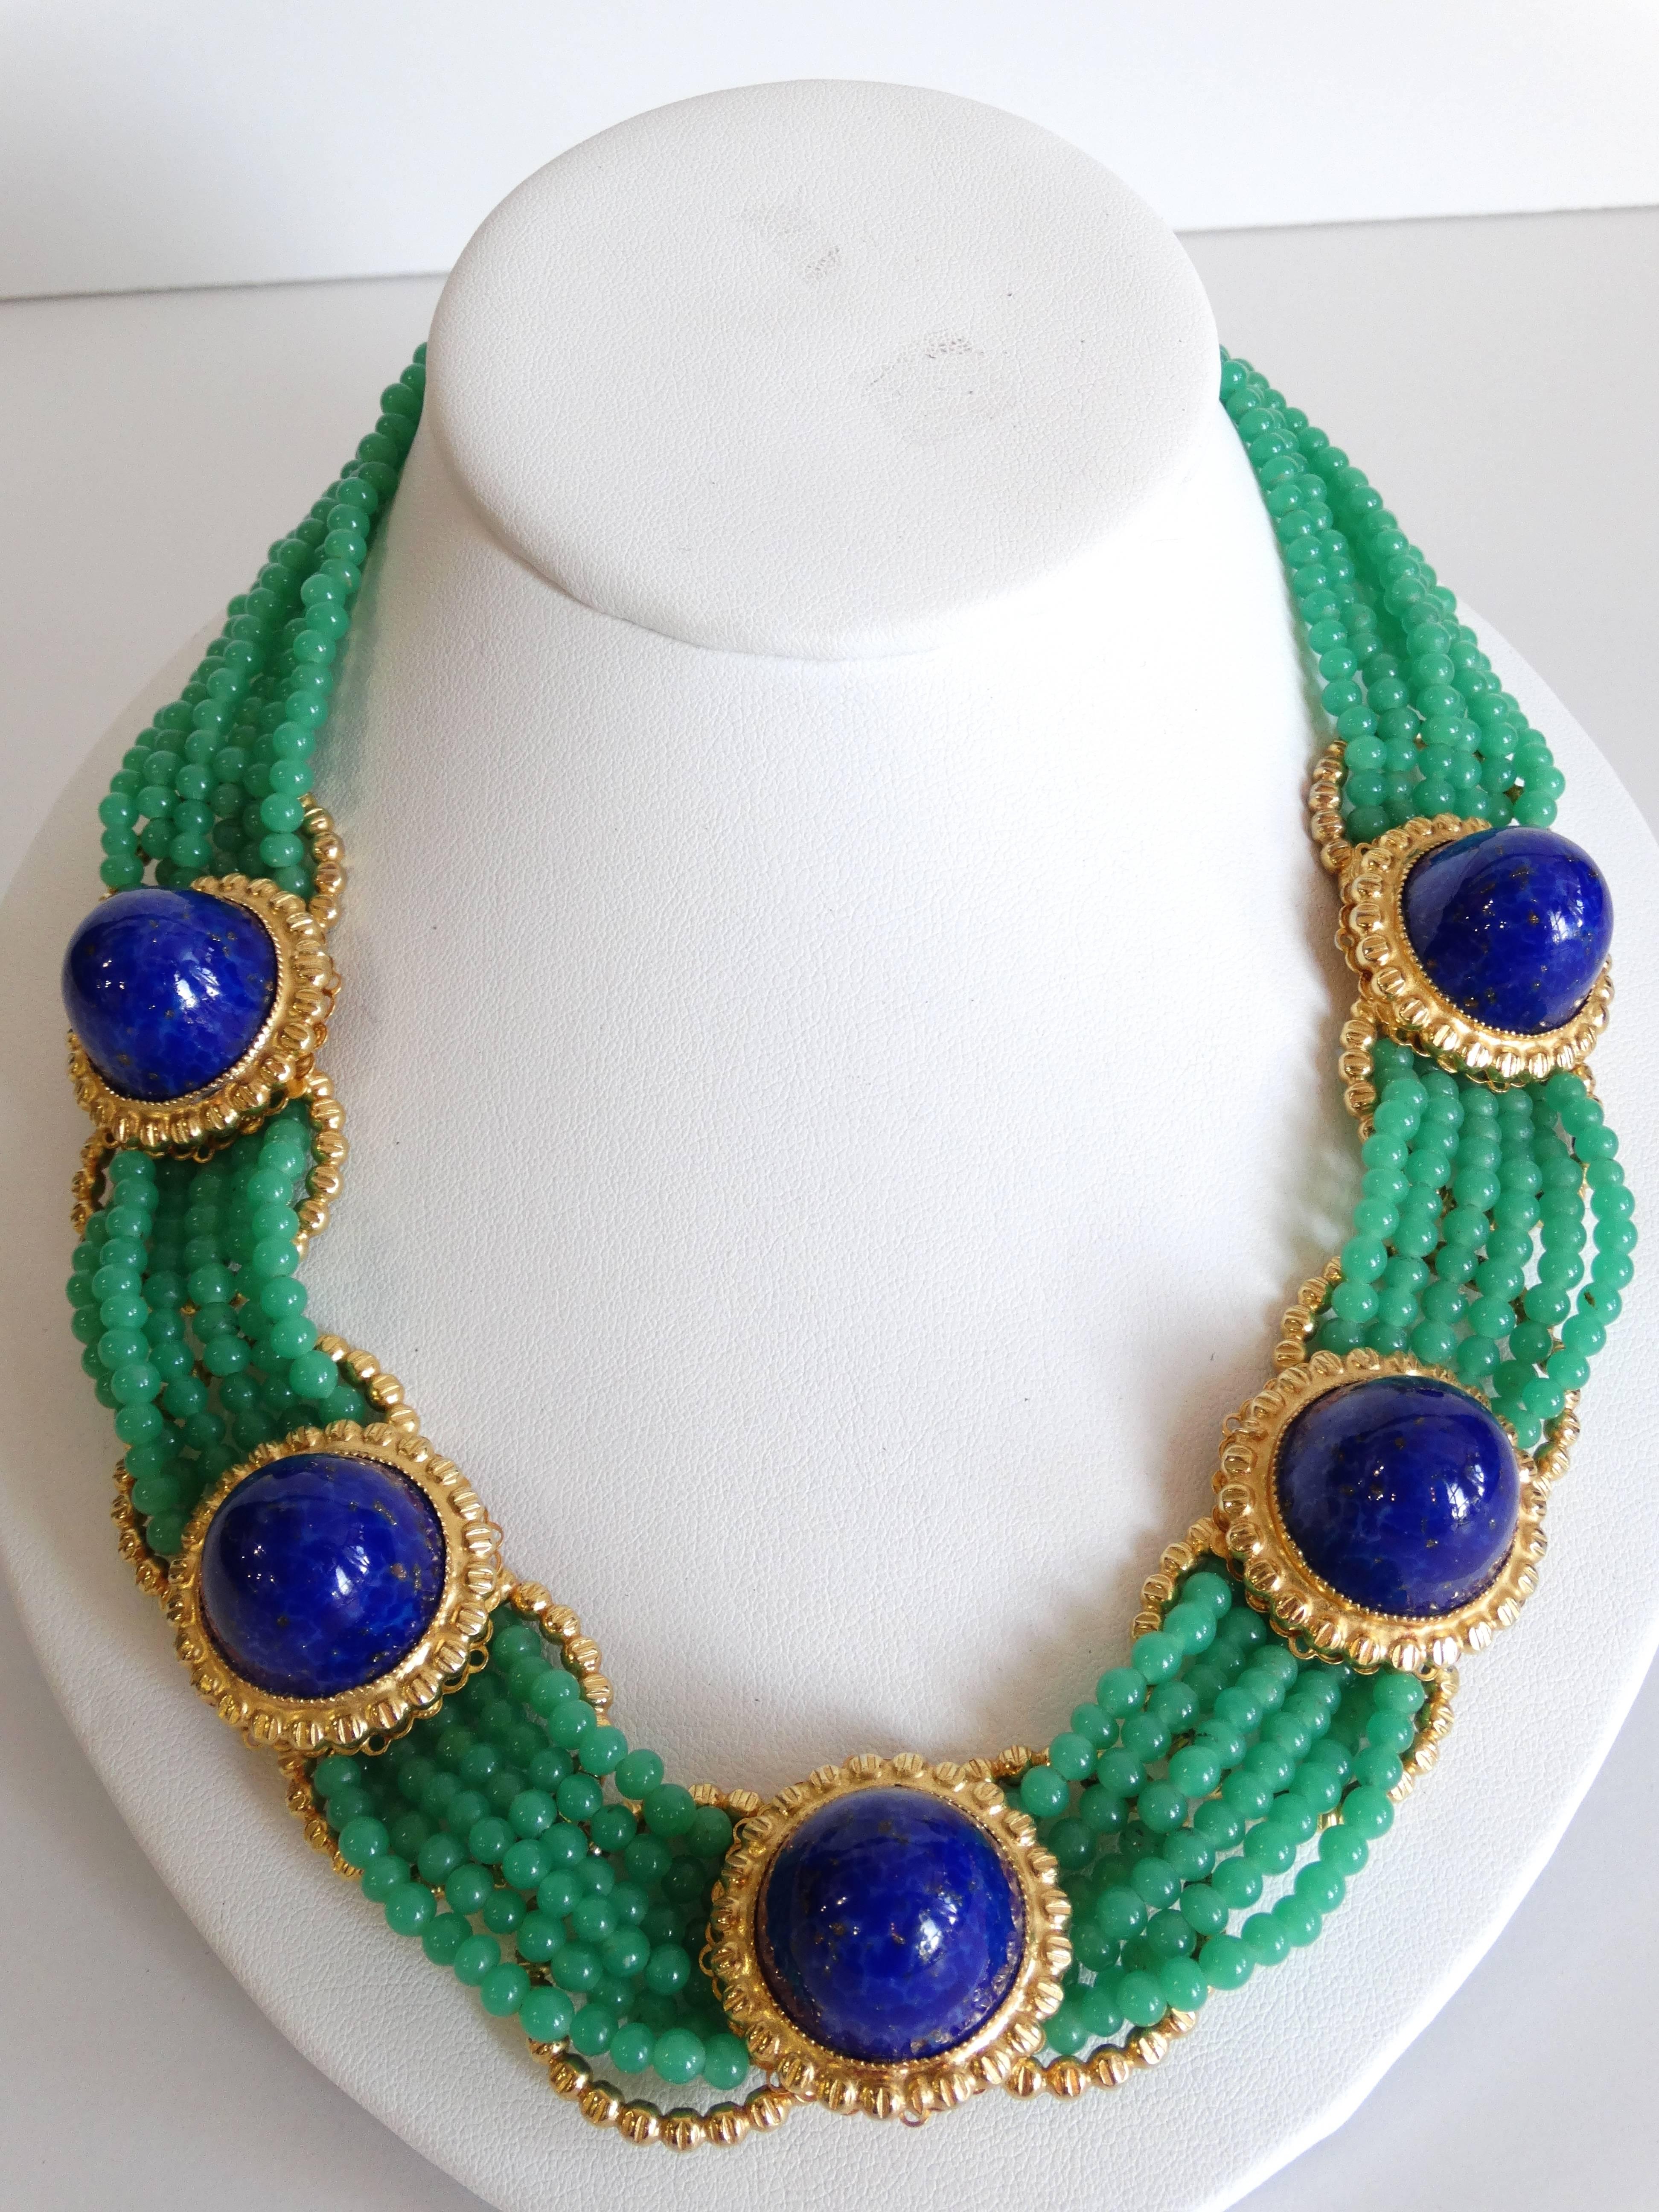 1975 William de Lillo Jade Cameo Glass and Lapis Lazuli Collar Necklace  5